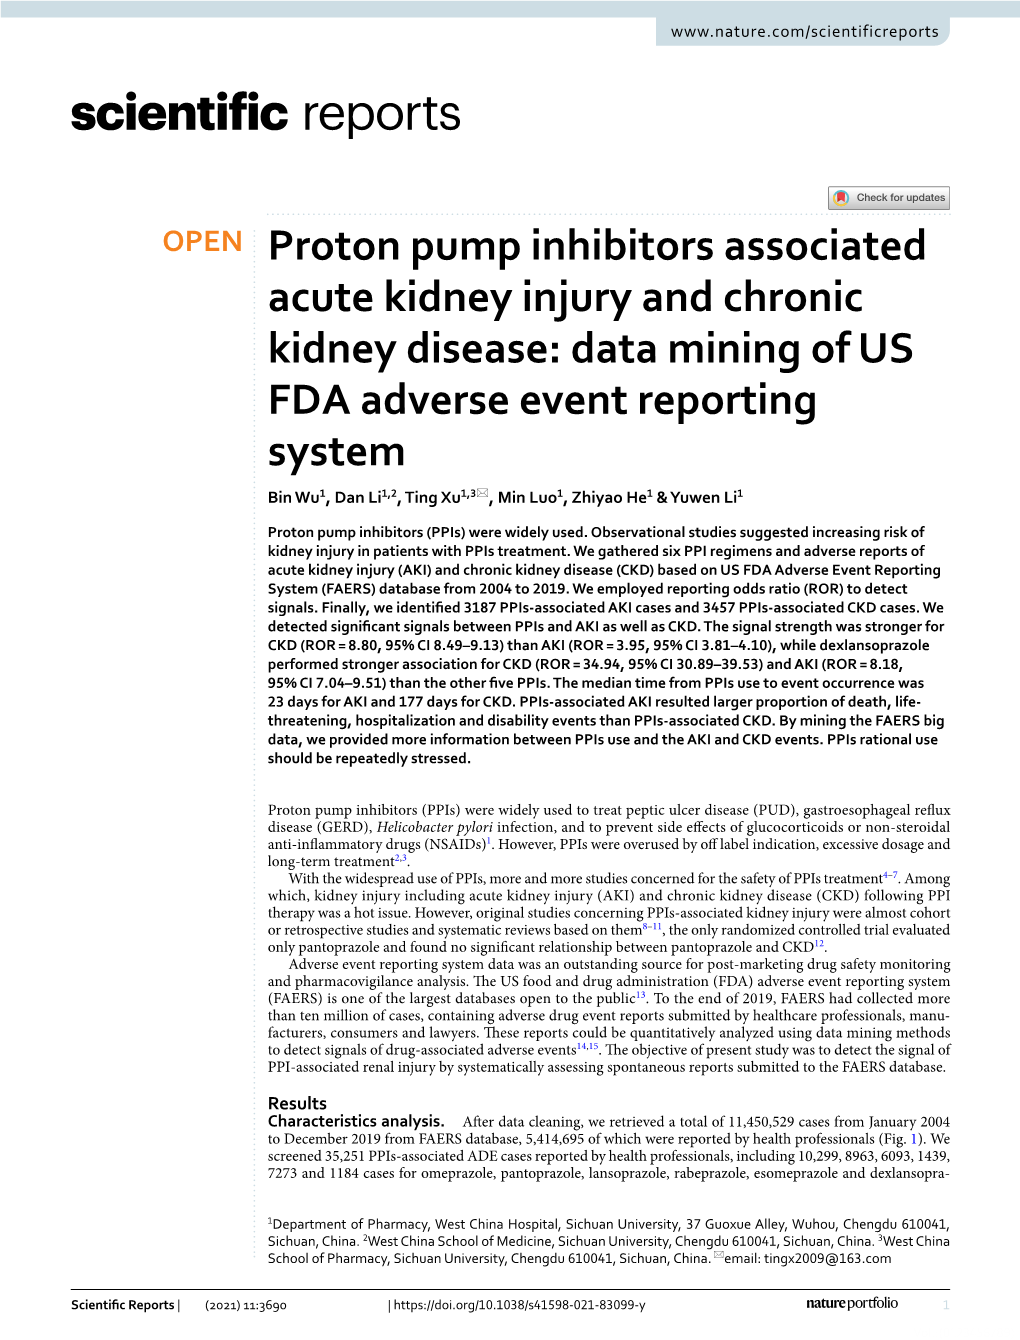 Proton Pump Inhibitors Associated Acute Kidney Injury And